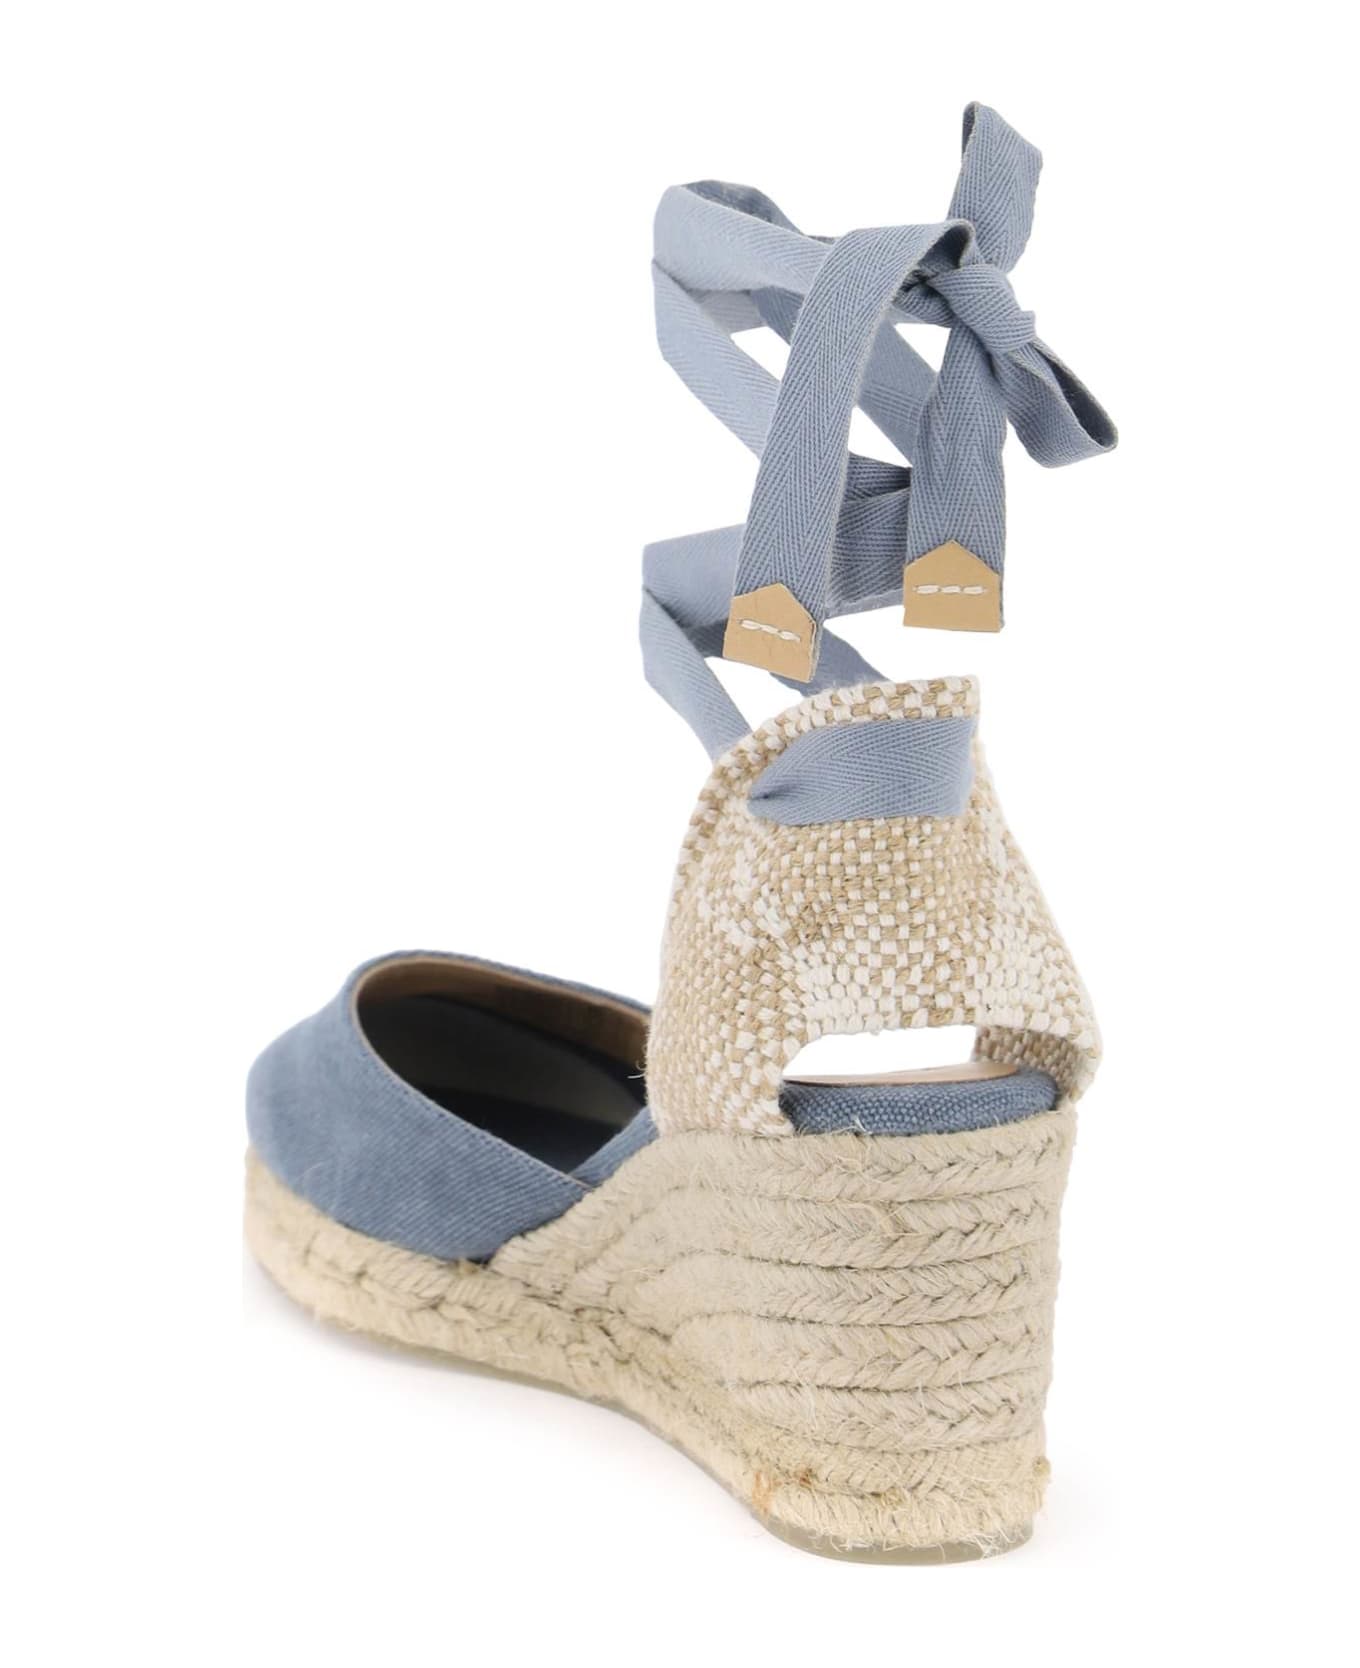 Castañer Carina Wedge Sandals - CITADEL (Blue)